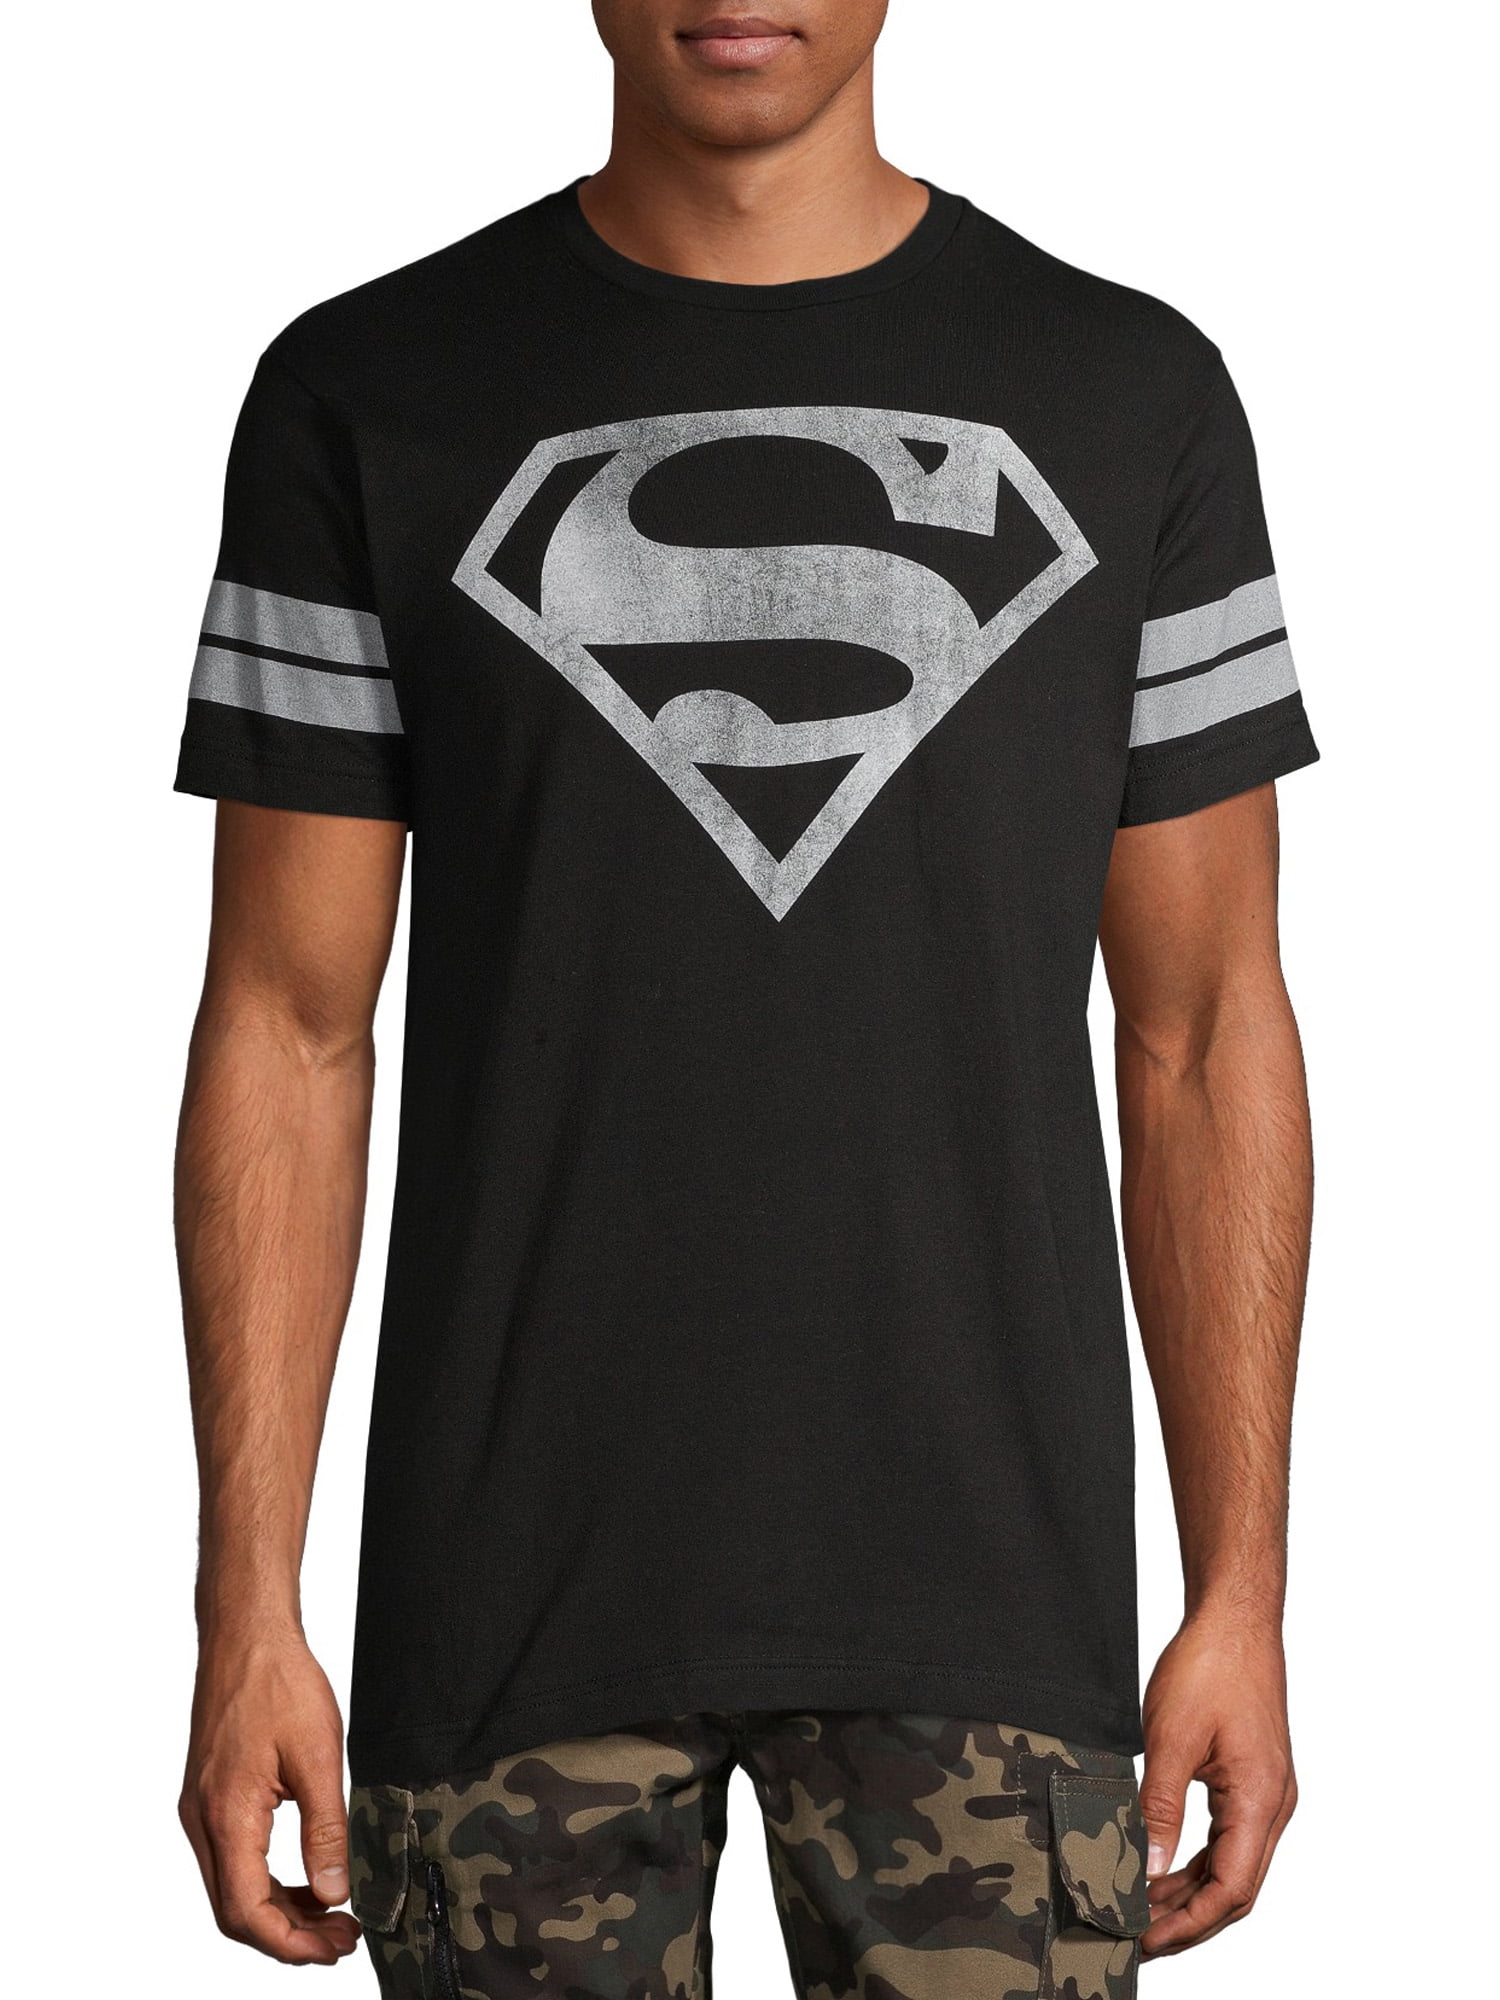 Sizes S-4XL Ready to ship! Superman T-Shirt